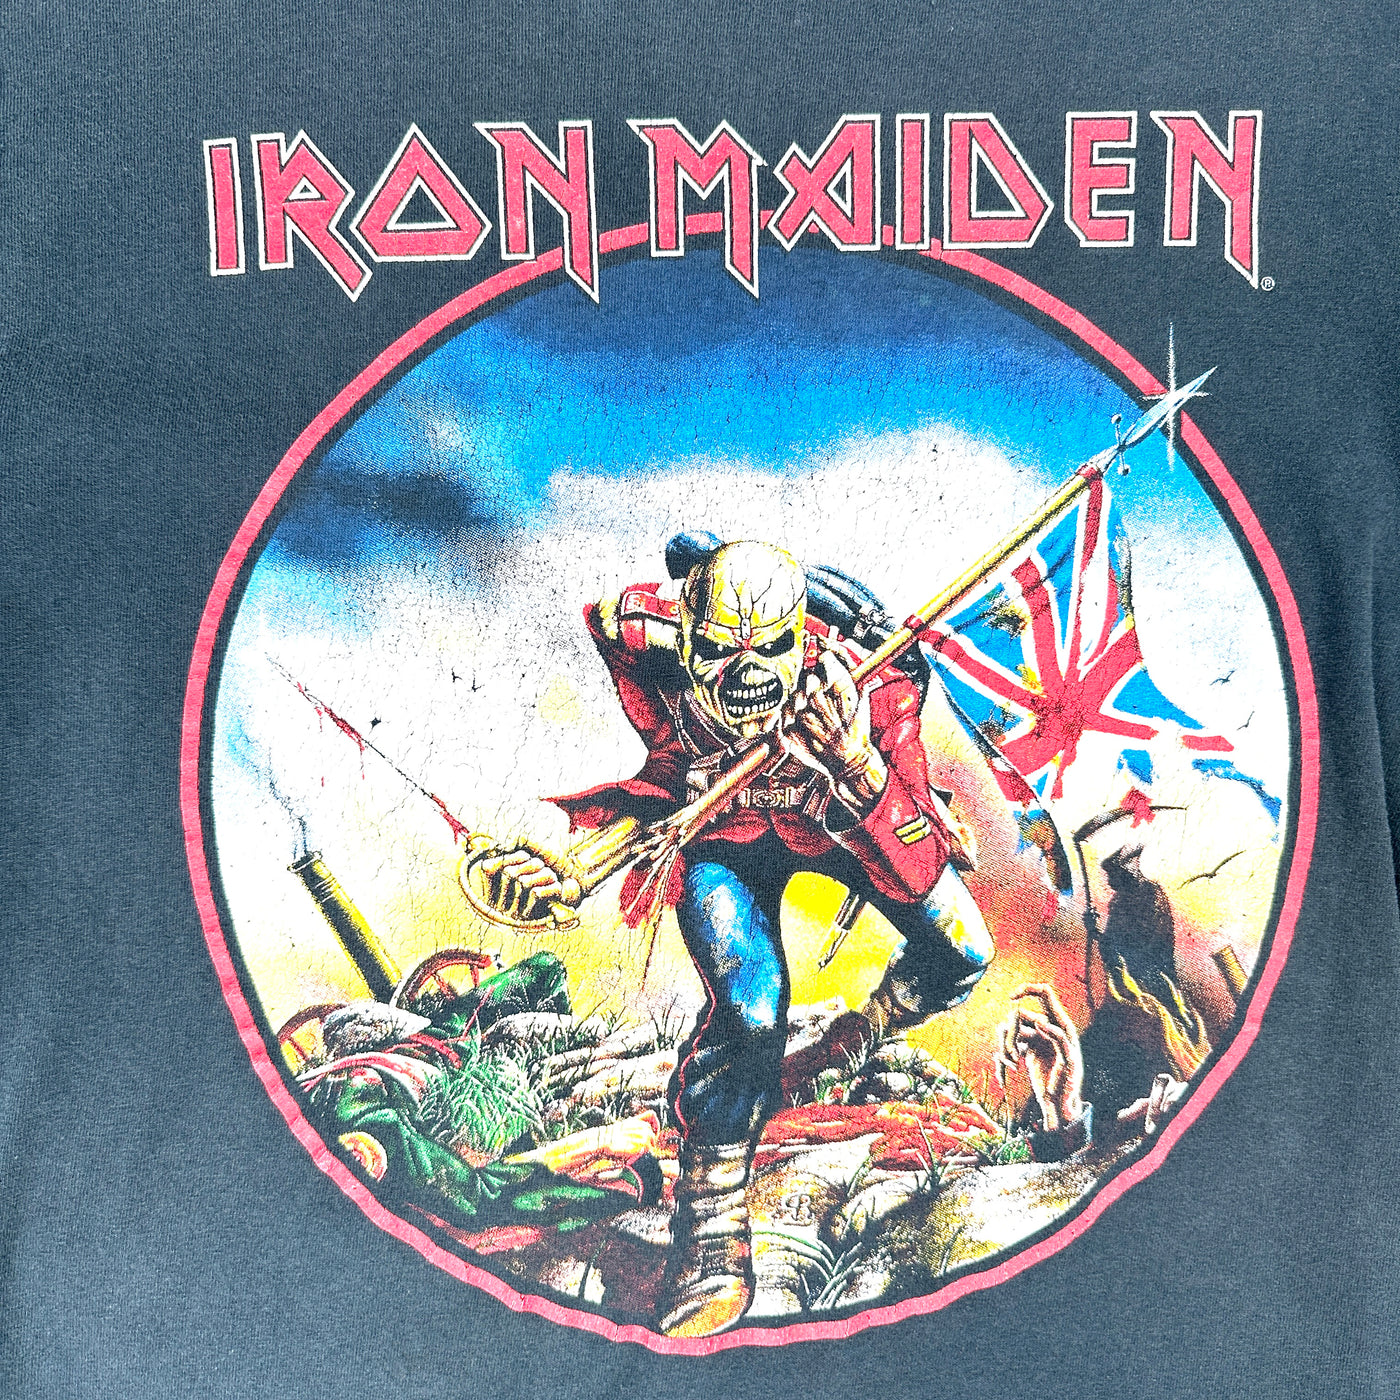 70's Iron Maiden Black Music T-shirt sz S